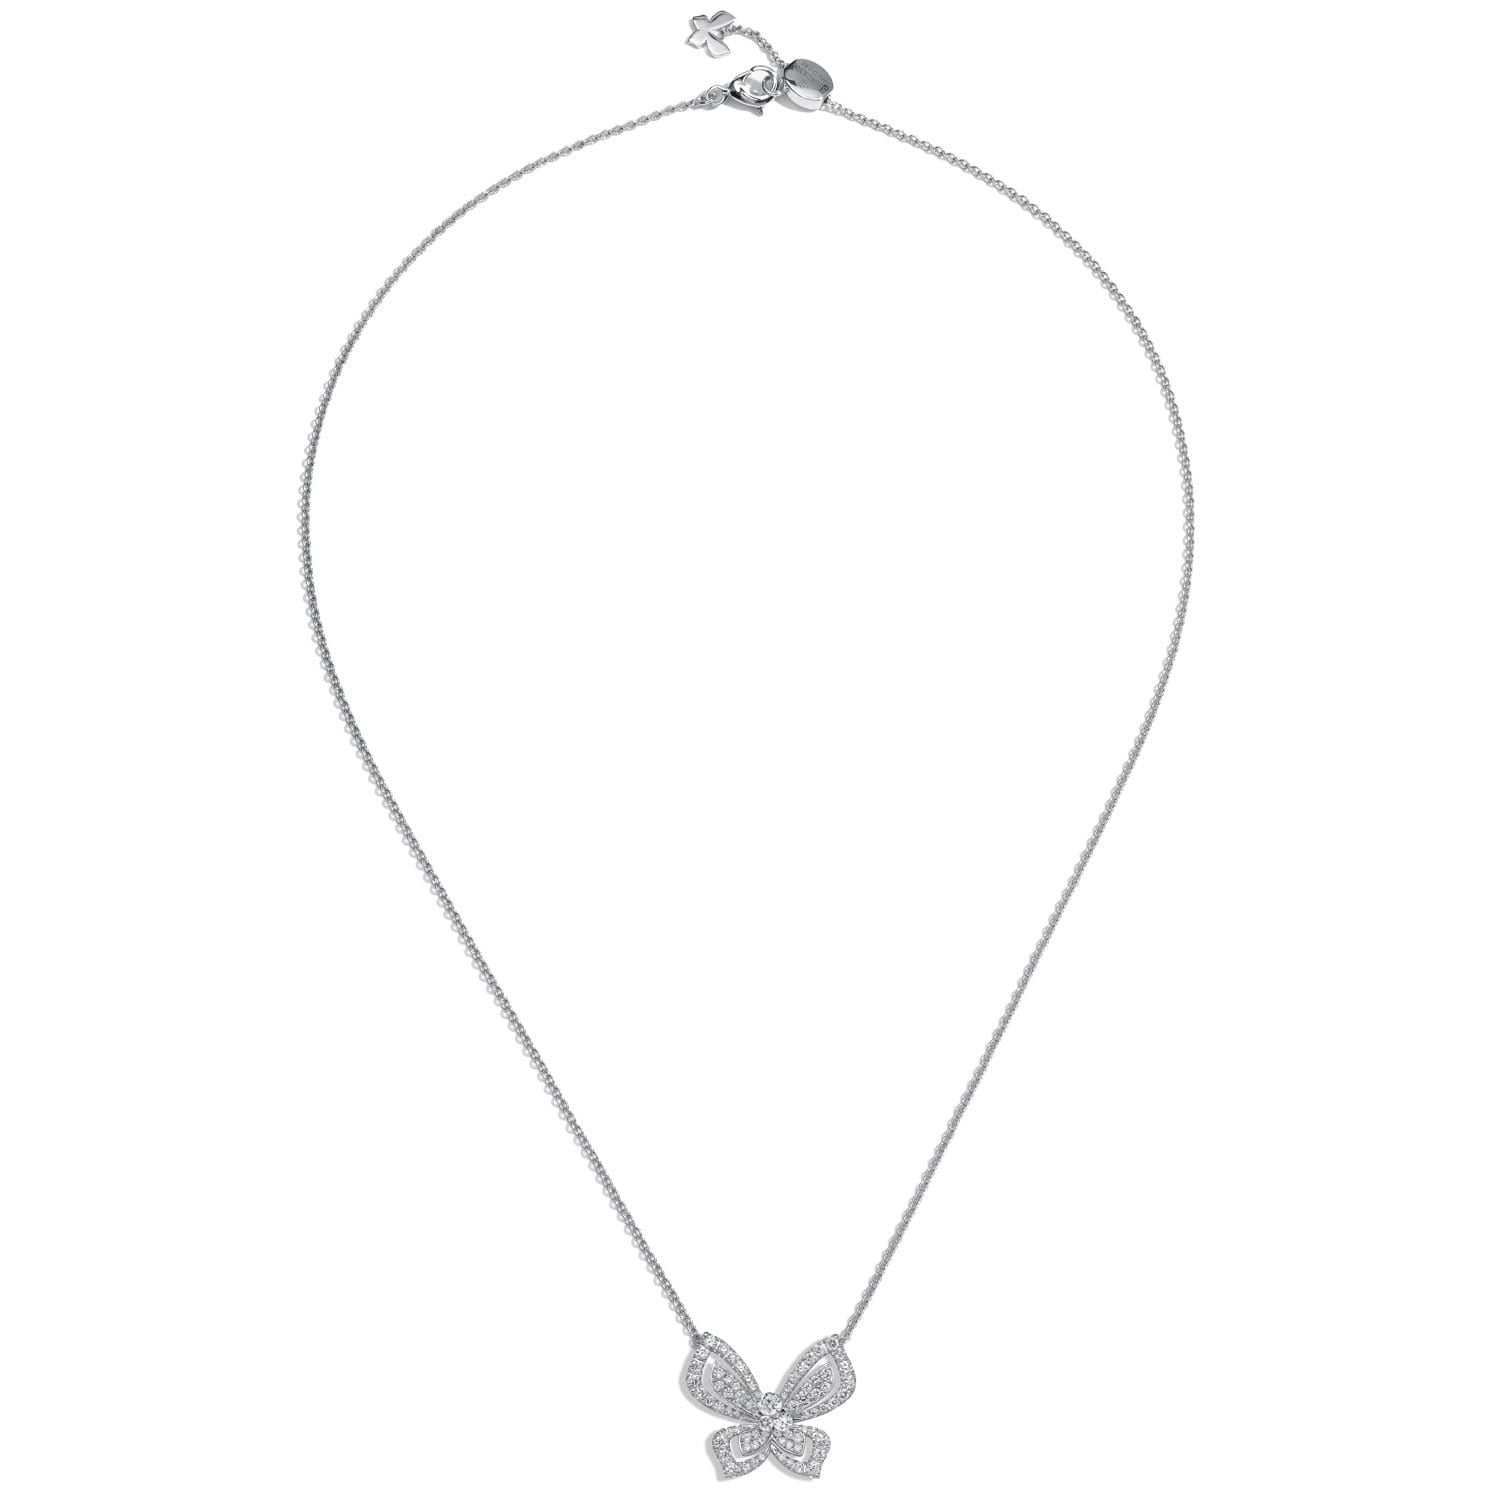 PICCOLE SONATE Butterfly Diamond Necklace